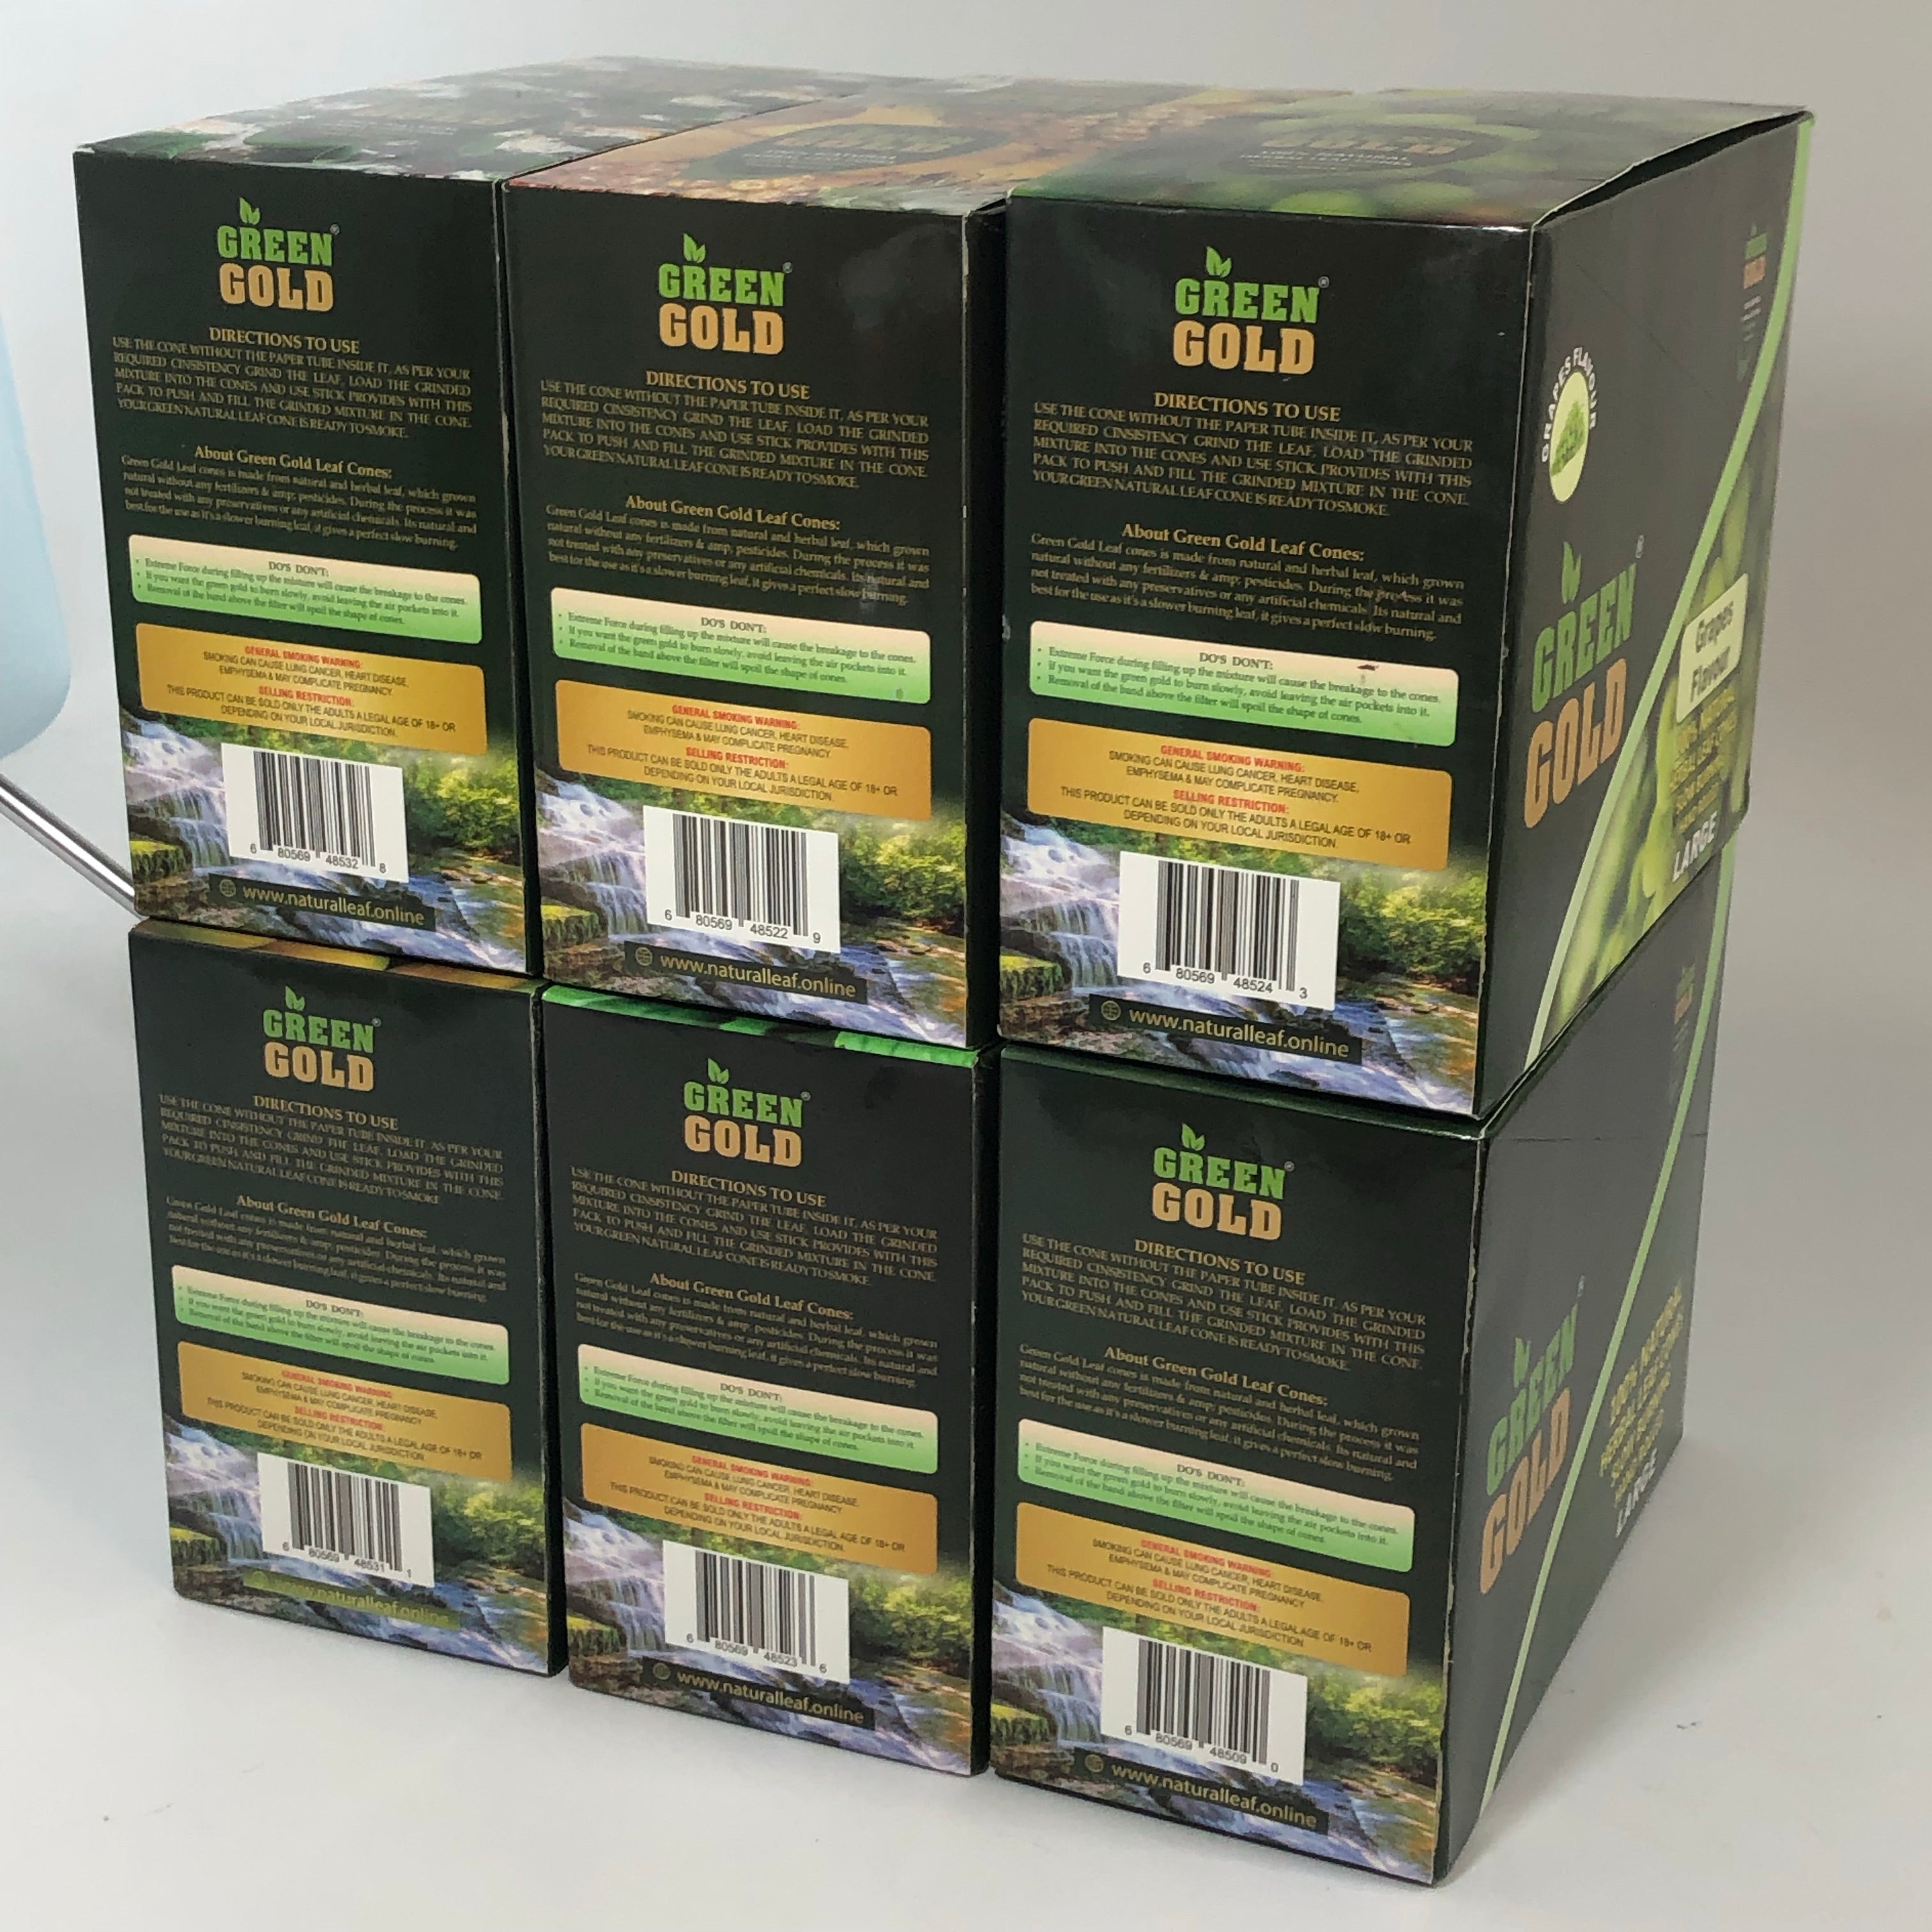 GREEN GOLD ALL NATURAL HERBAL LEAF CONES 24 BOXES PER DISPLAY (2 CONES PER BOX)